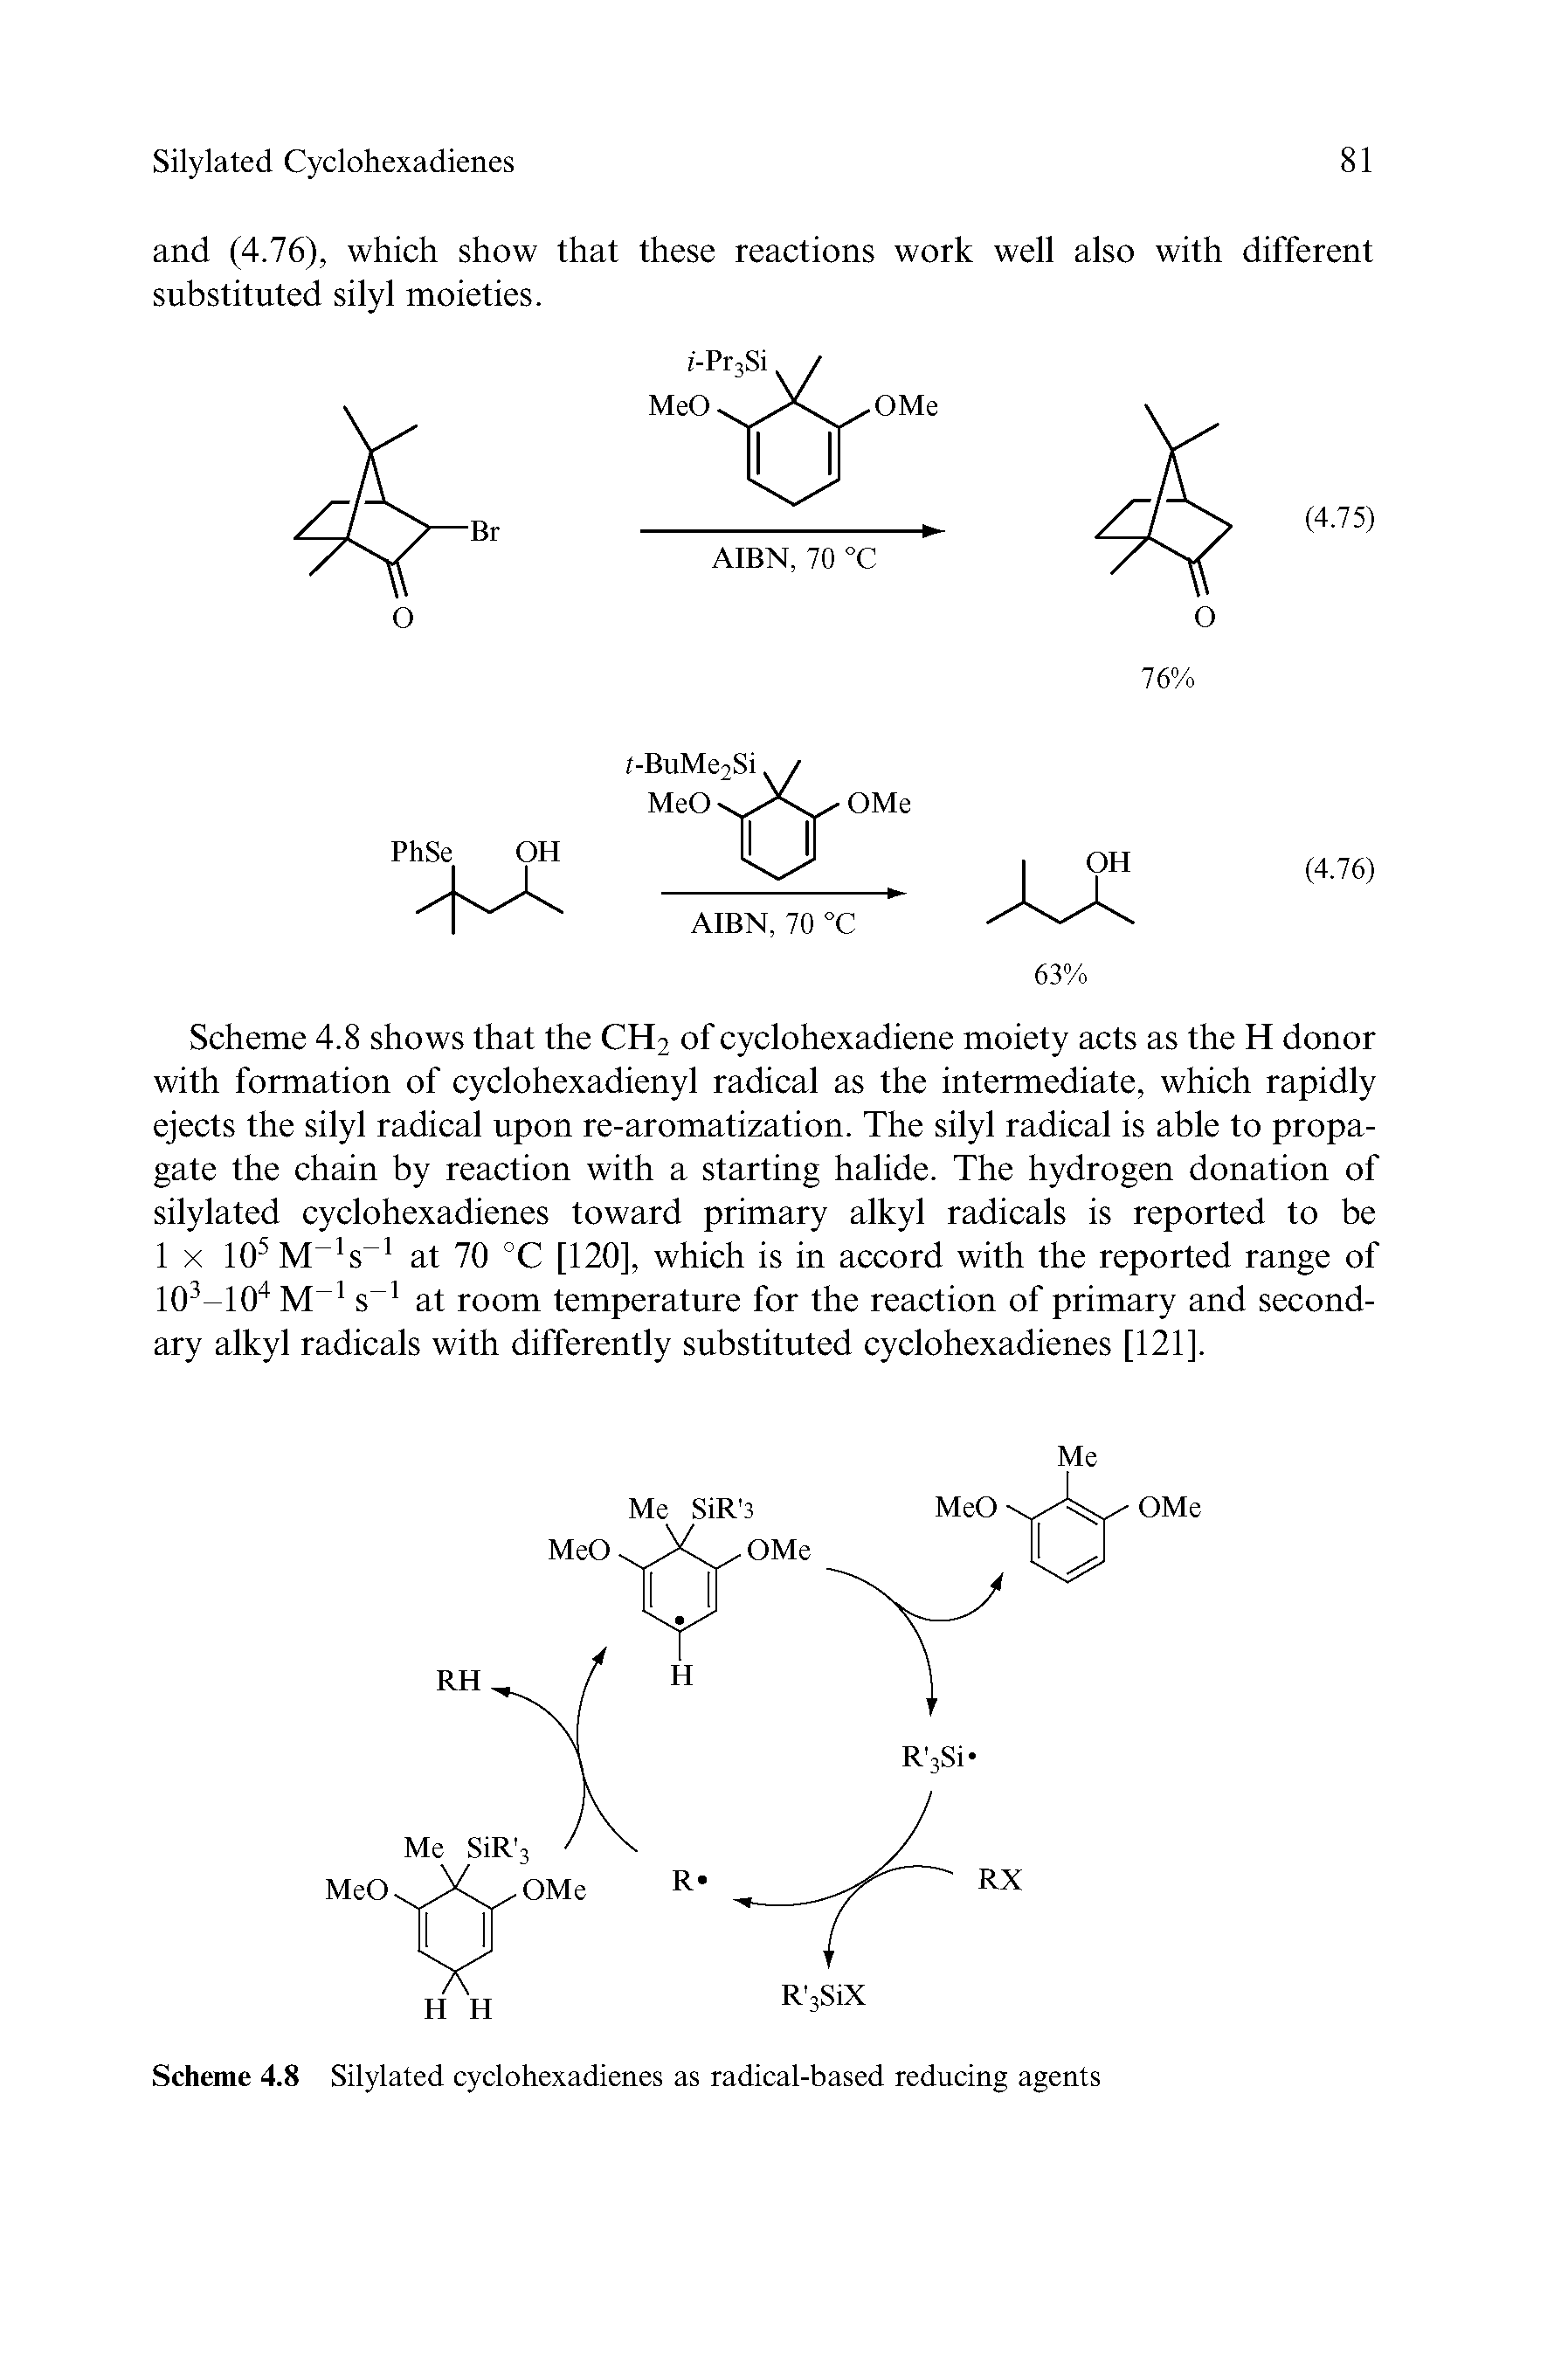 Scheme 4.8 Silylated cyclohexadienes as radical-based reducing agents...